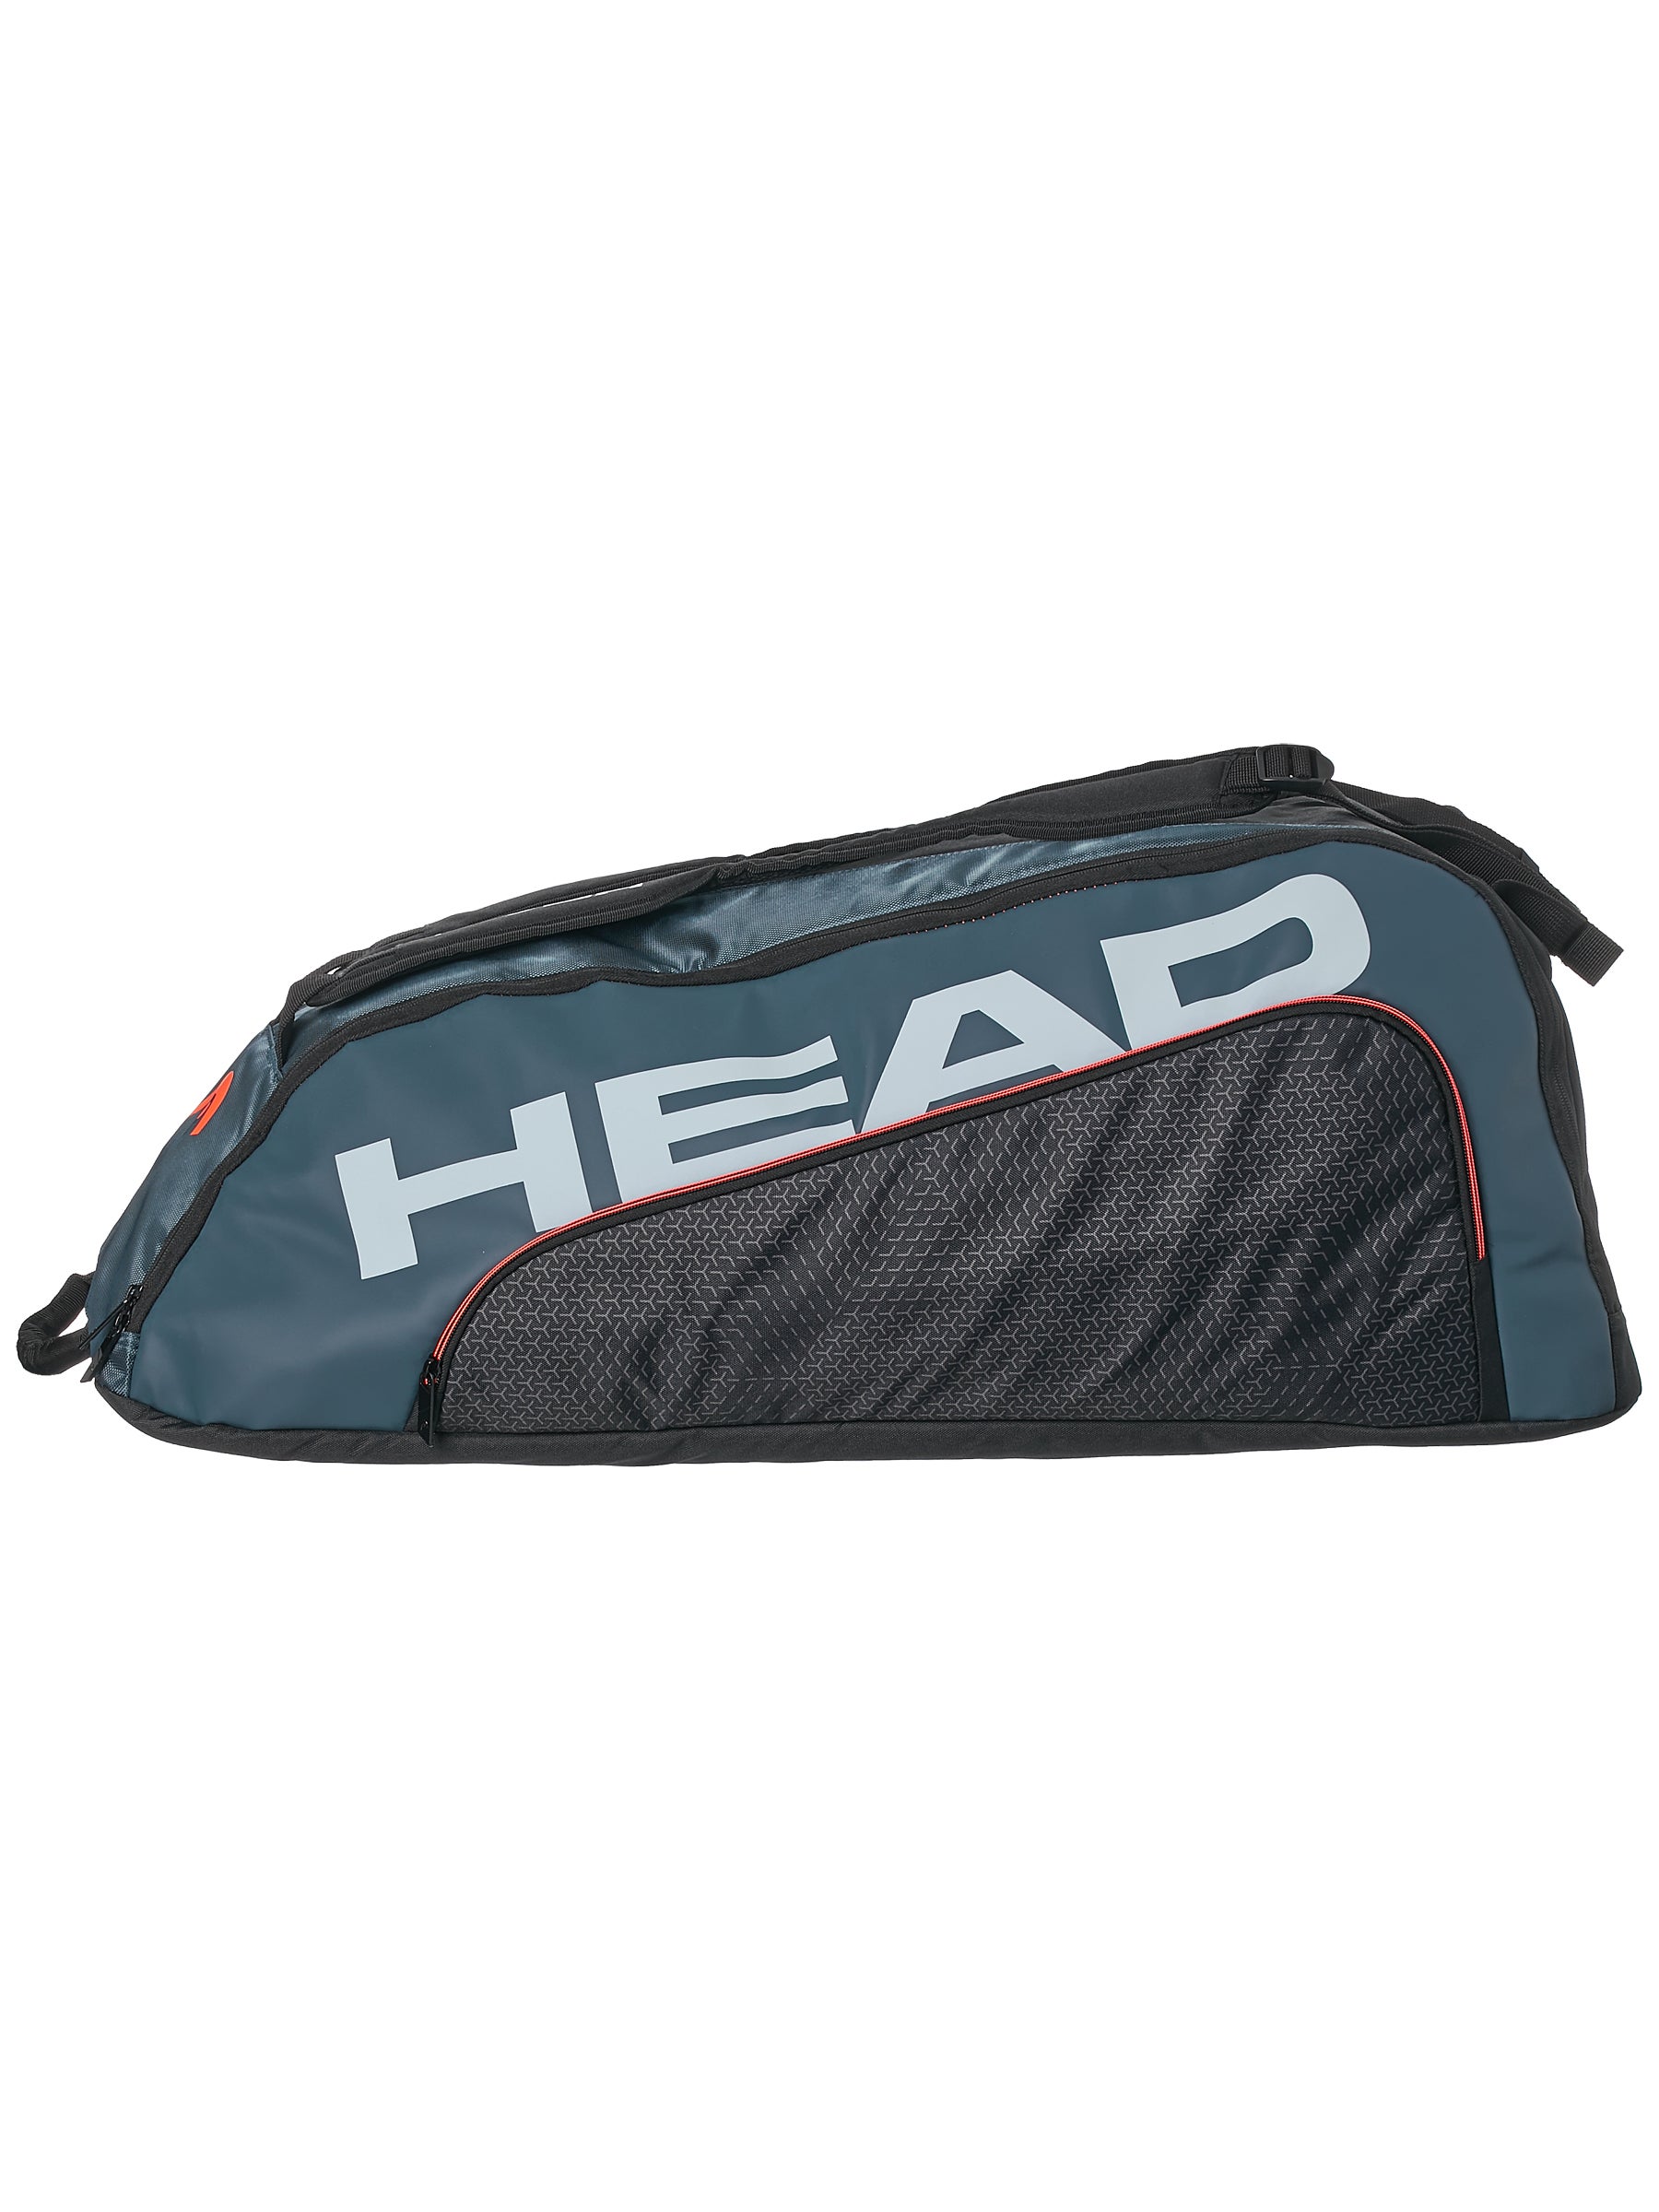 HEAD Tour Team 9r Supercombi Sac de Tennis Mixte